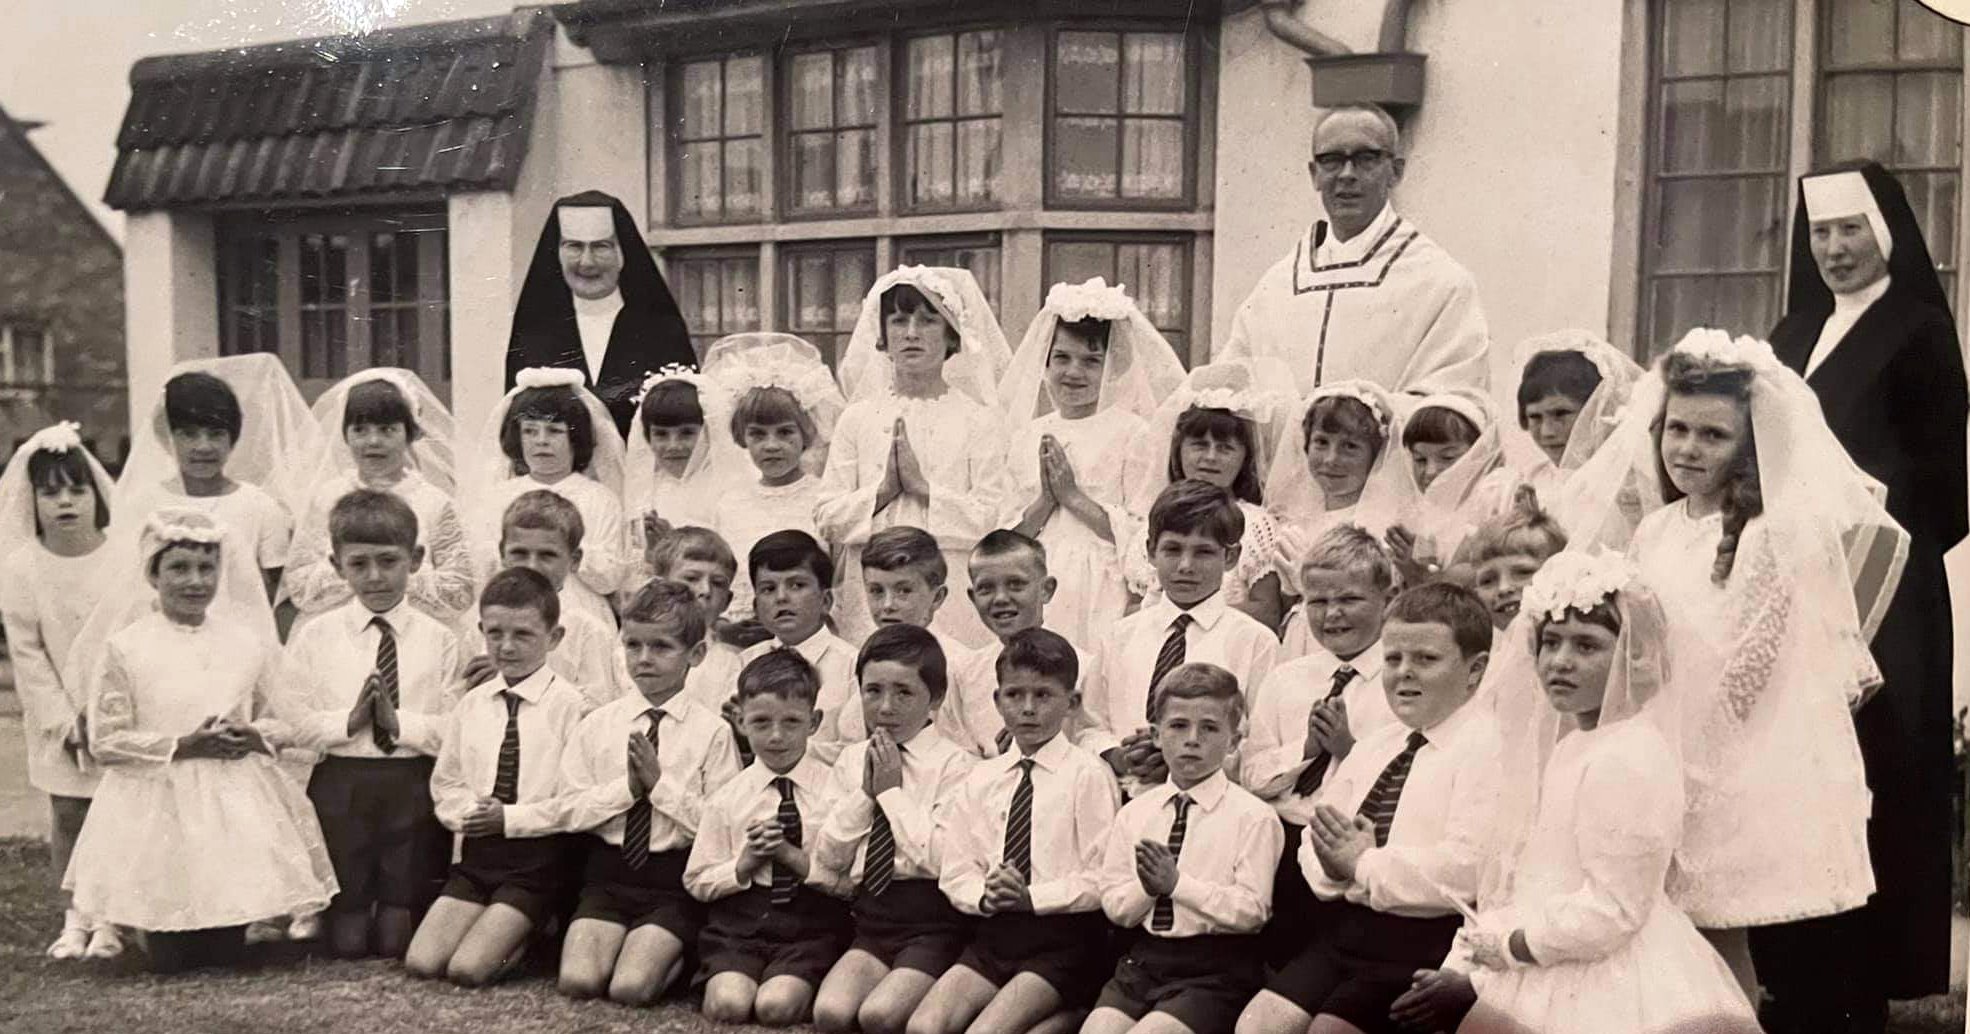 St Josephs School St Josephs School And Sisters Of Mercy Convent